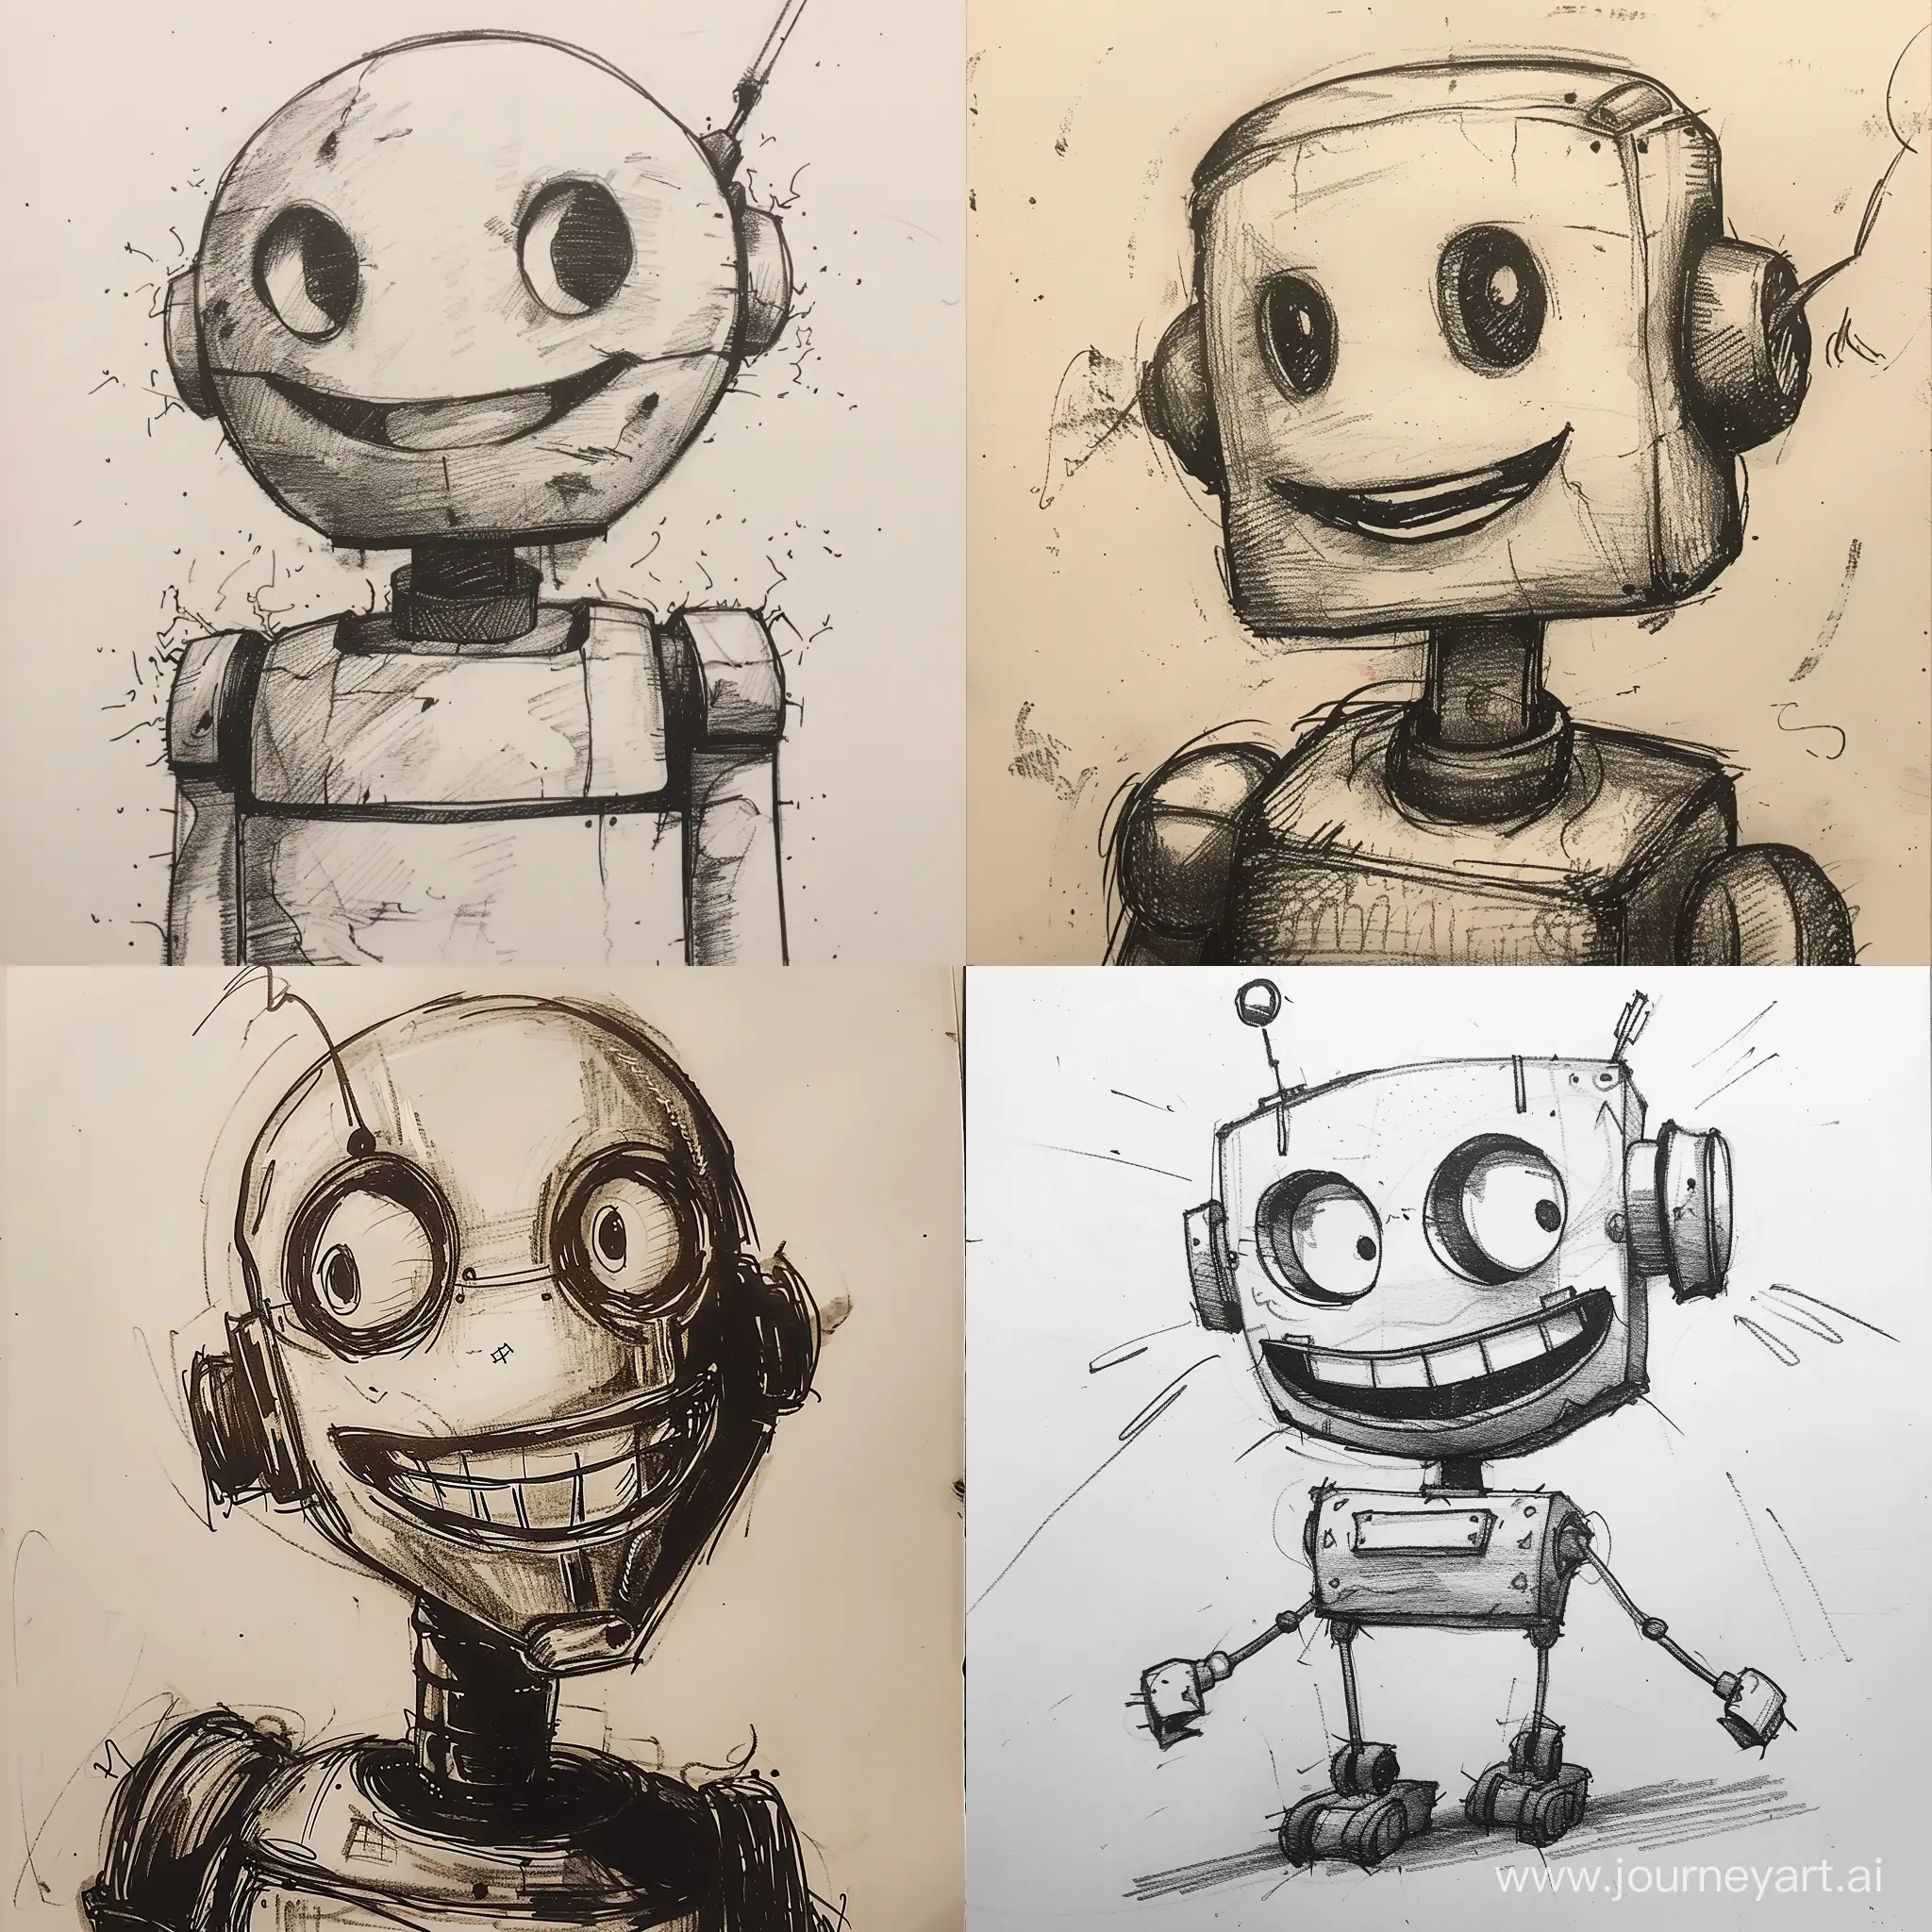 Cheerful-Smiling-Robot-Illustration